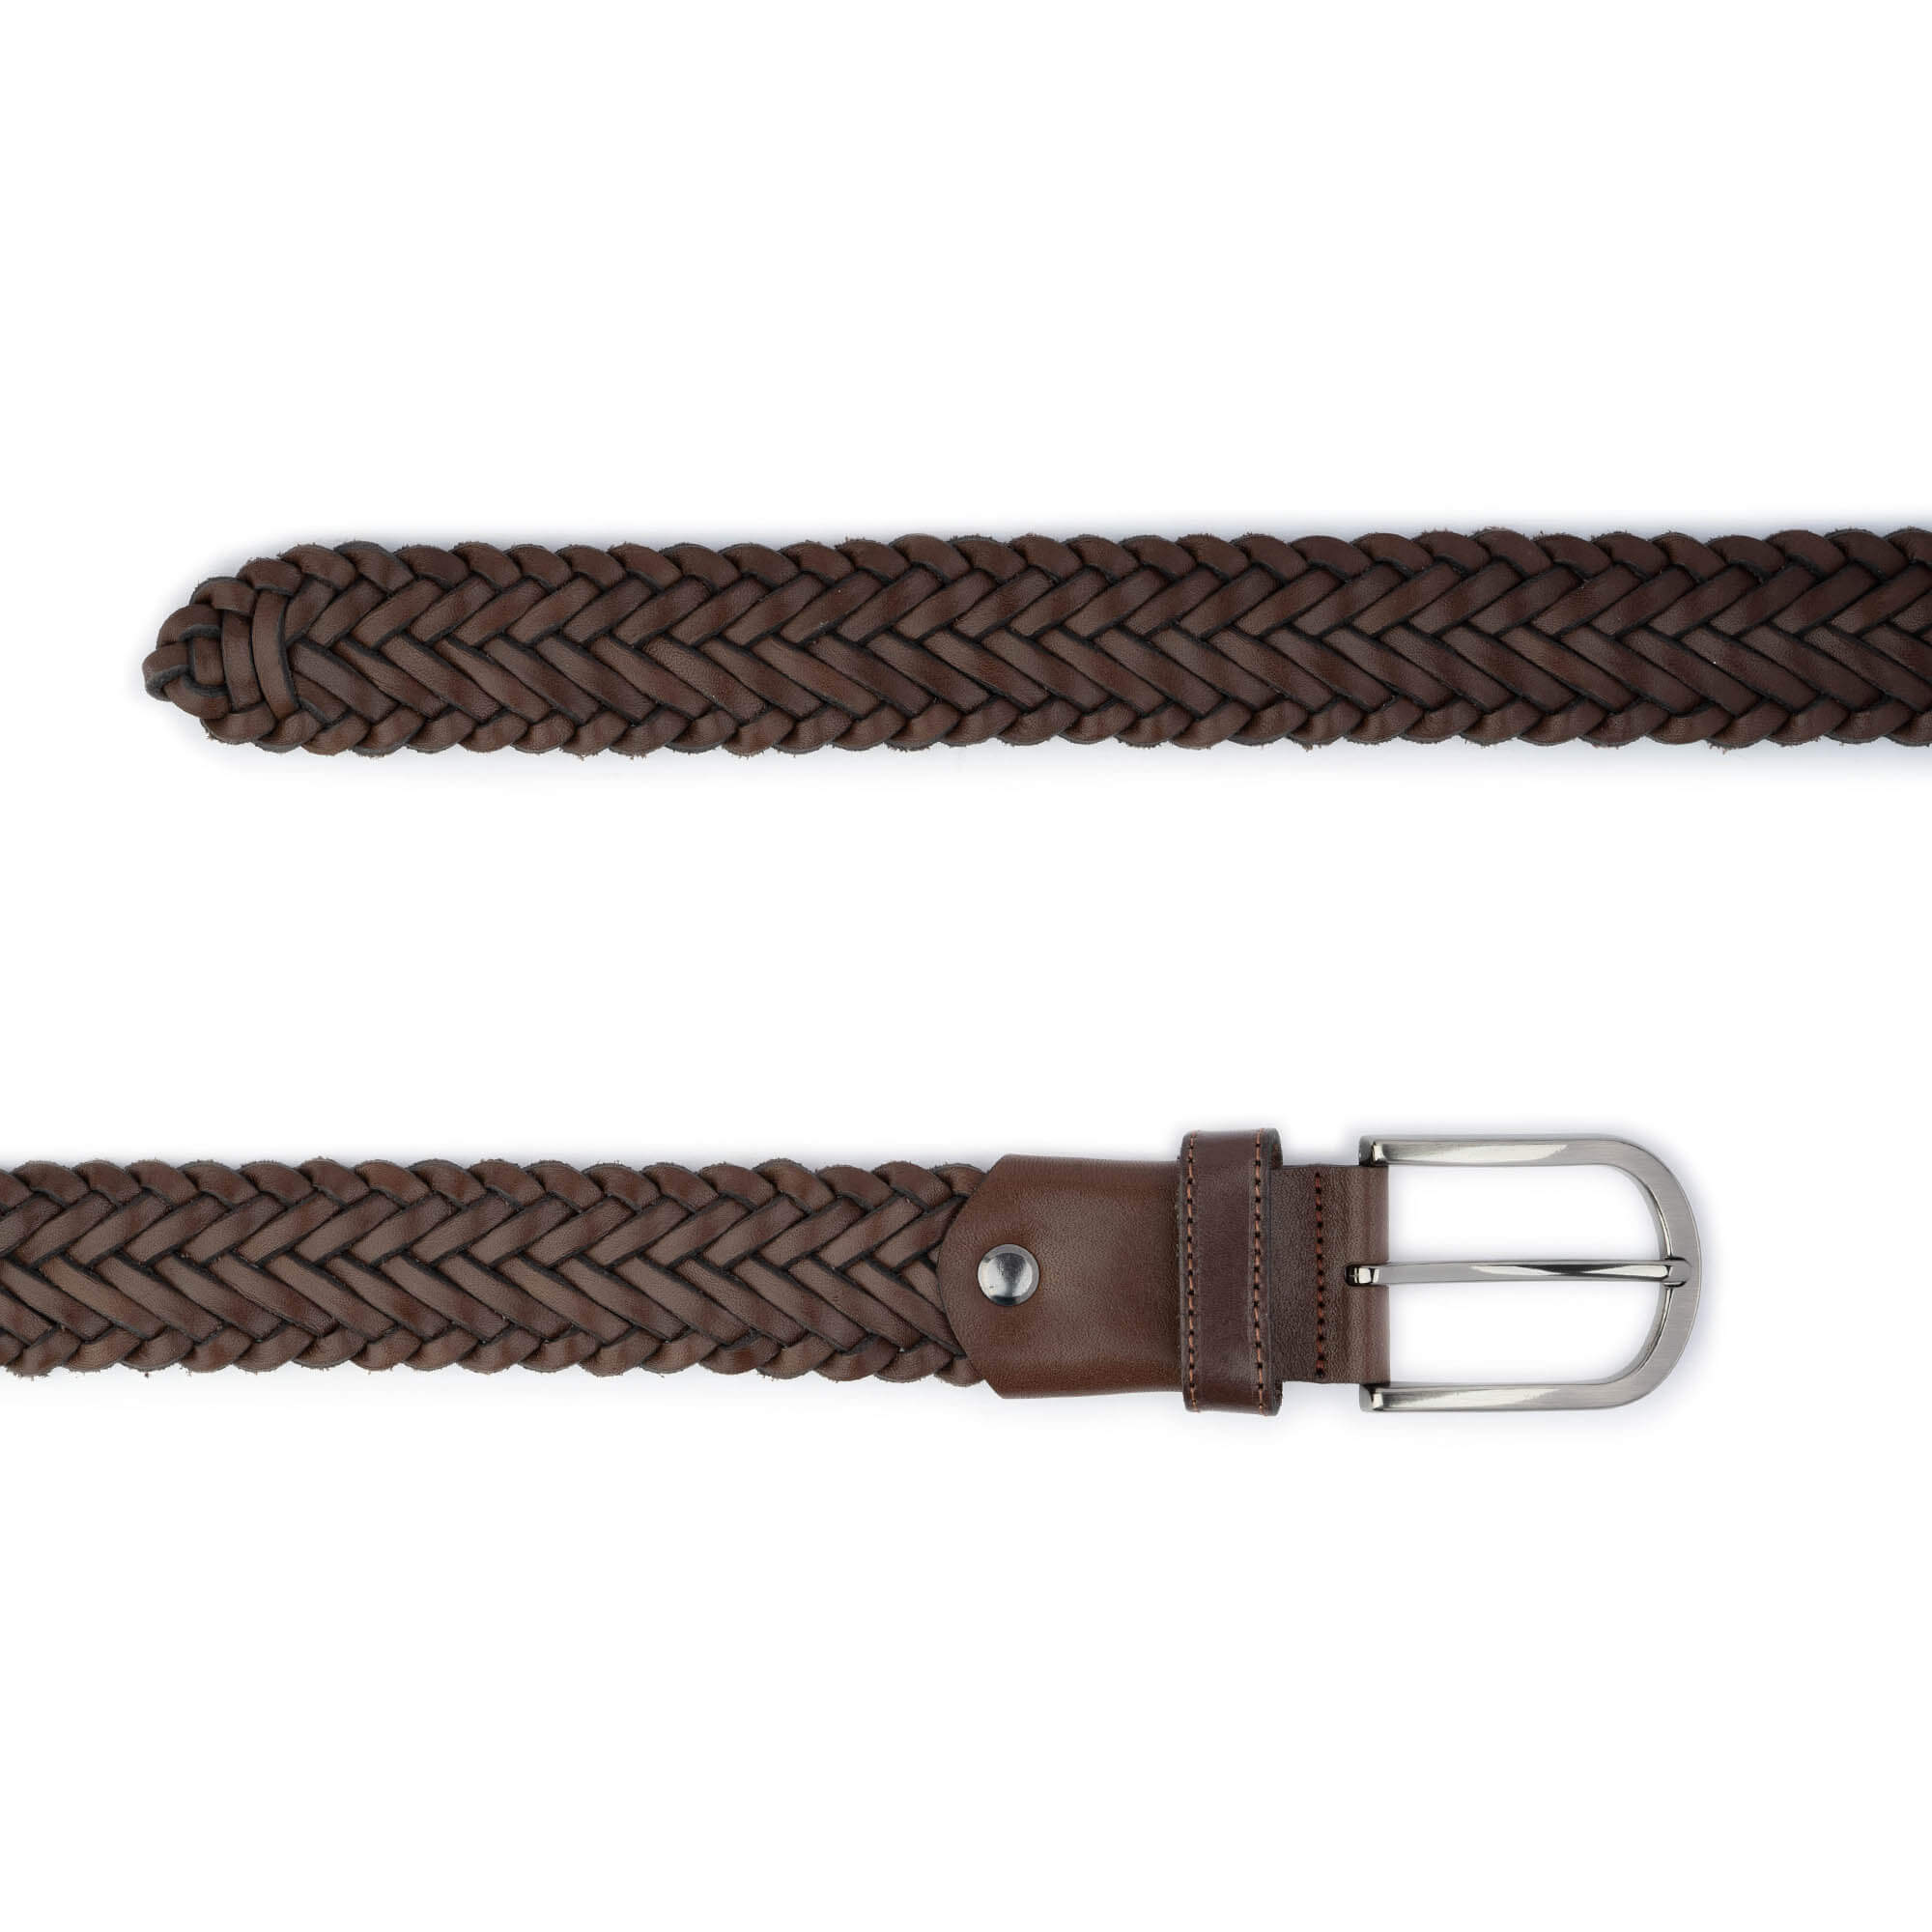 Braided leather belt - Men